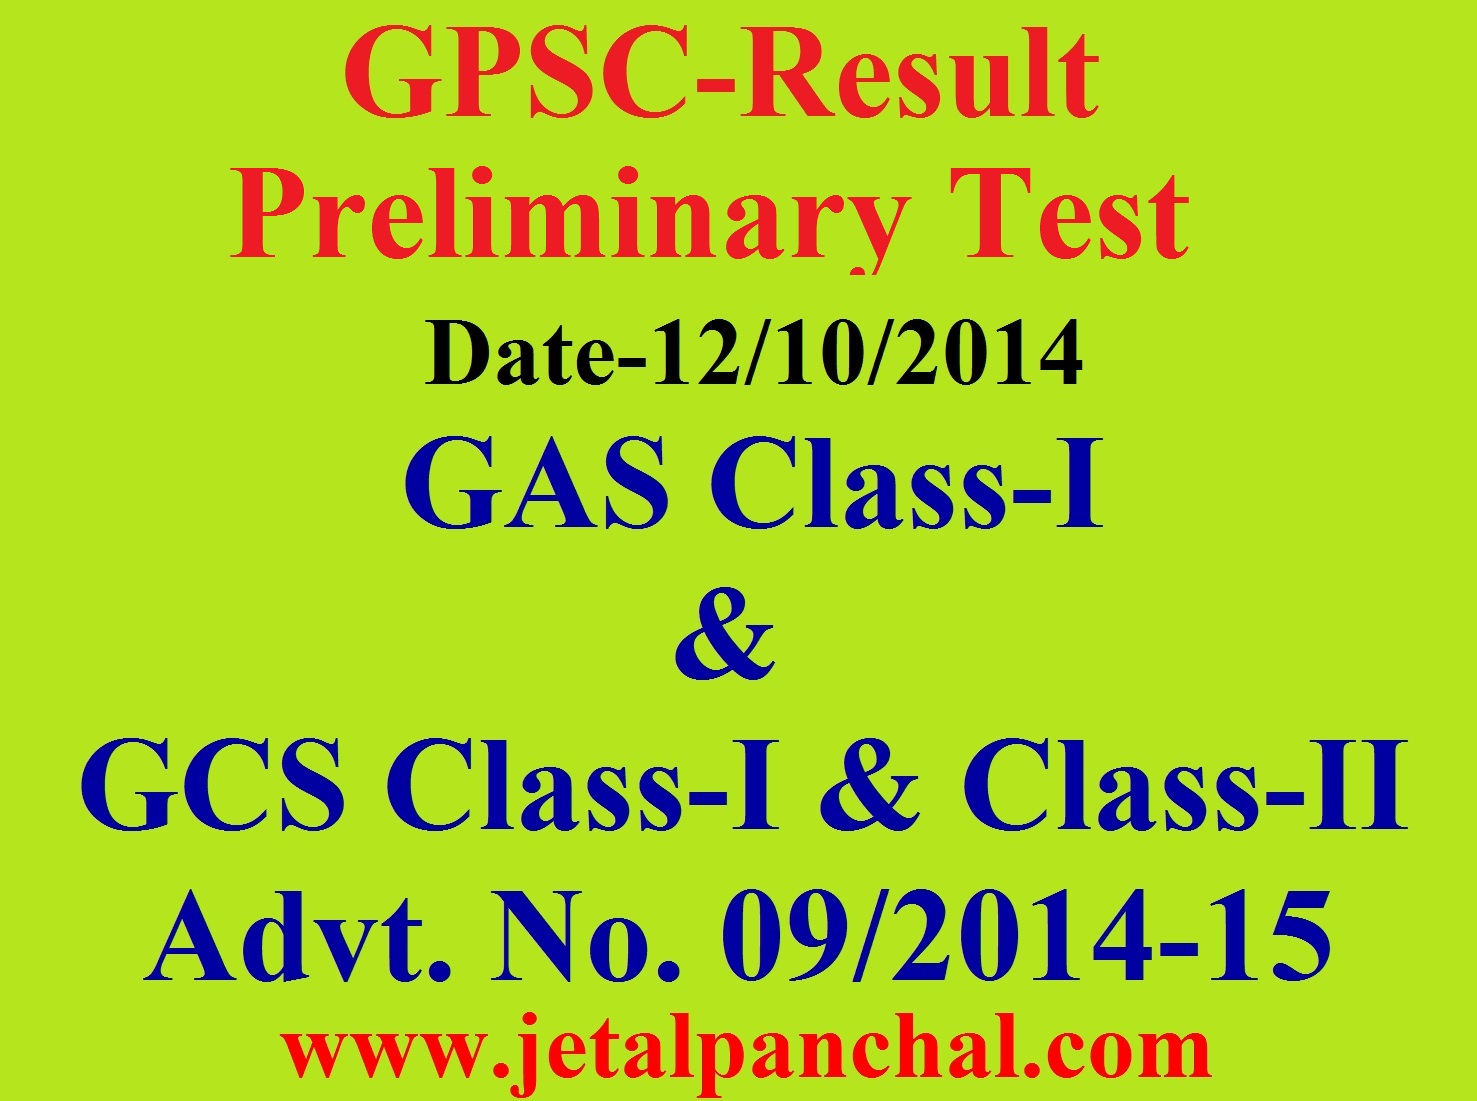 GPSC-GAS Class-I & GCS Class-I & Class-II Result